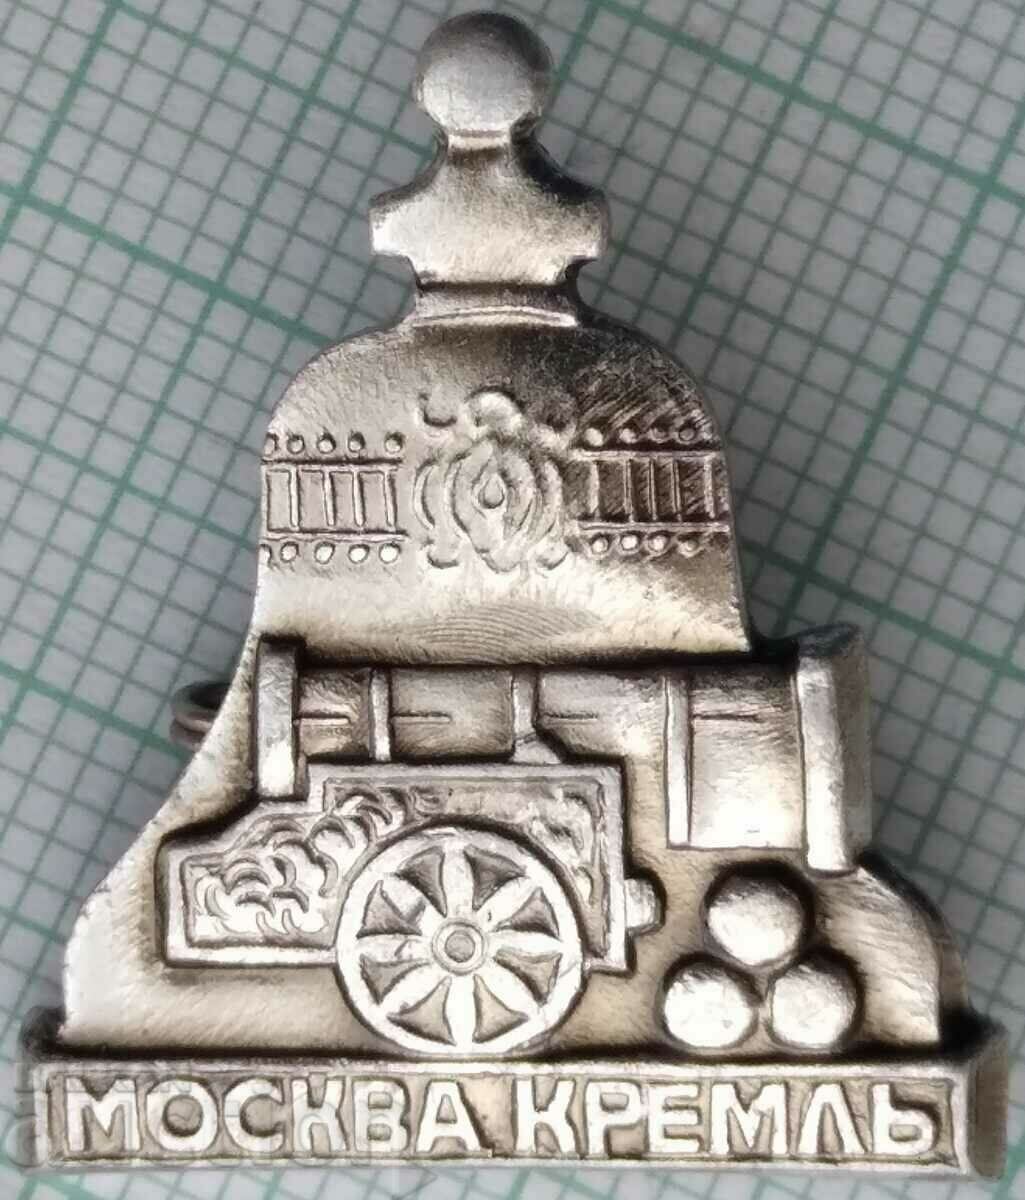 13580 Badge - Moscow Kremlin - Tsar rifle Bell